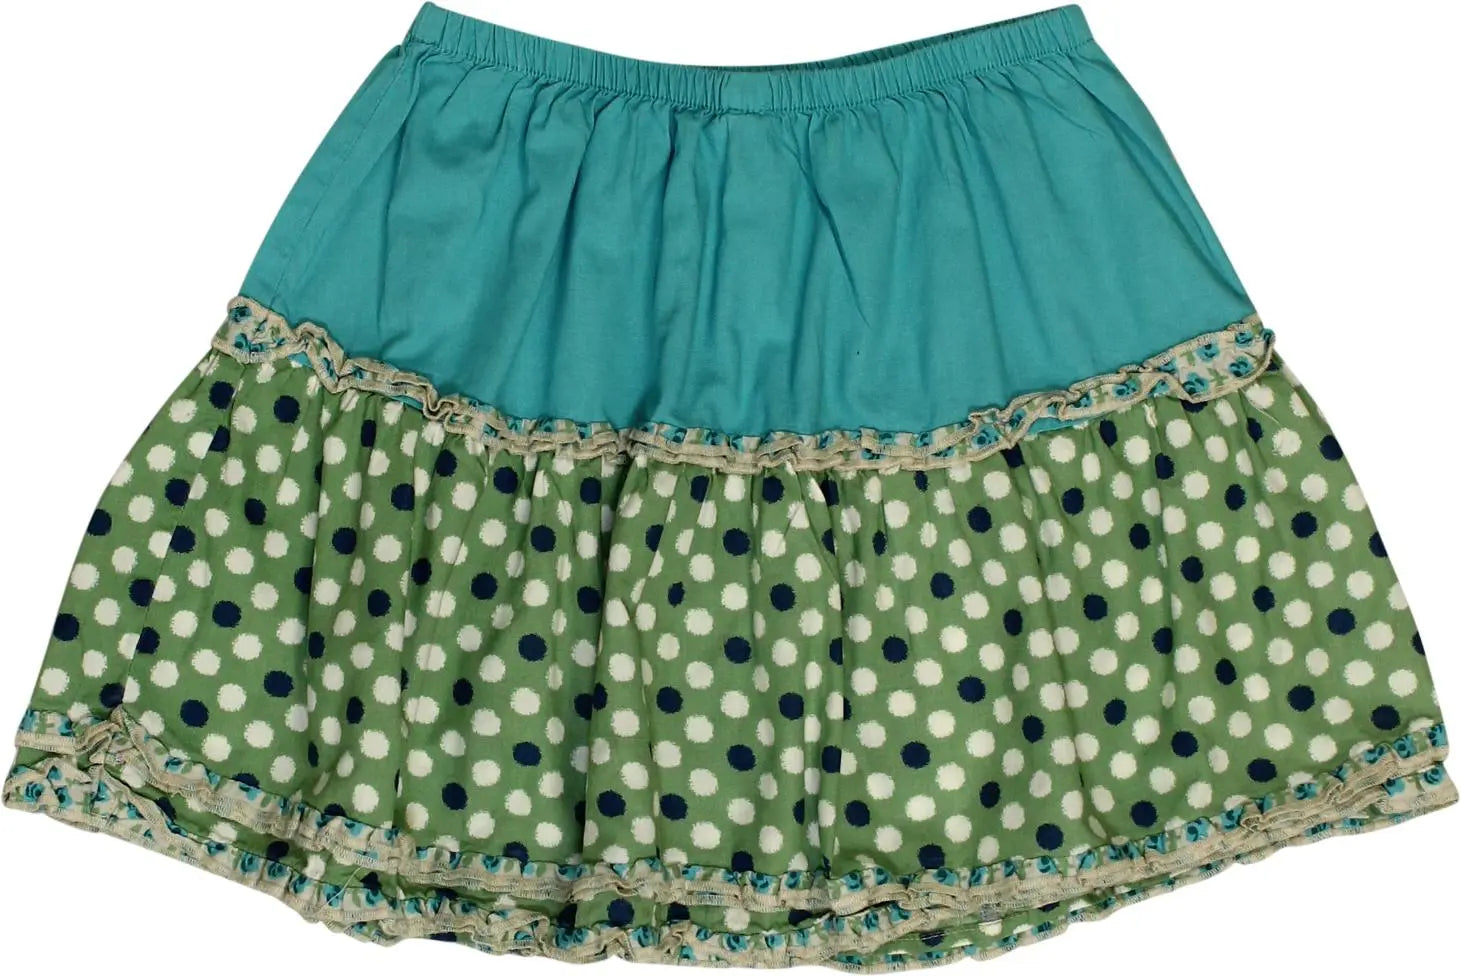 Oshkosh - Polka Dot Skirt- ThriftTale.com - Vintage and second handclothing